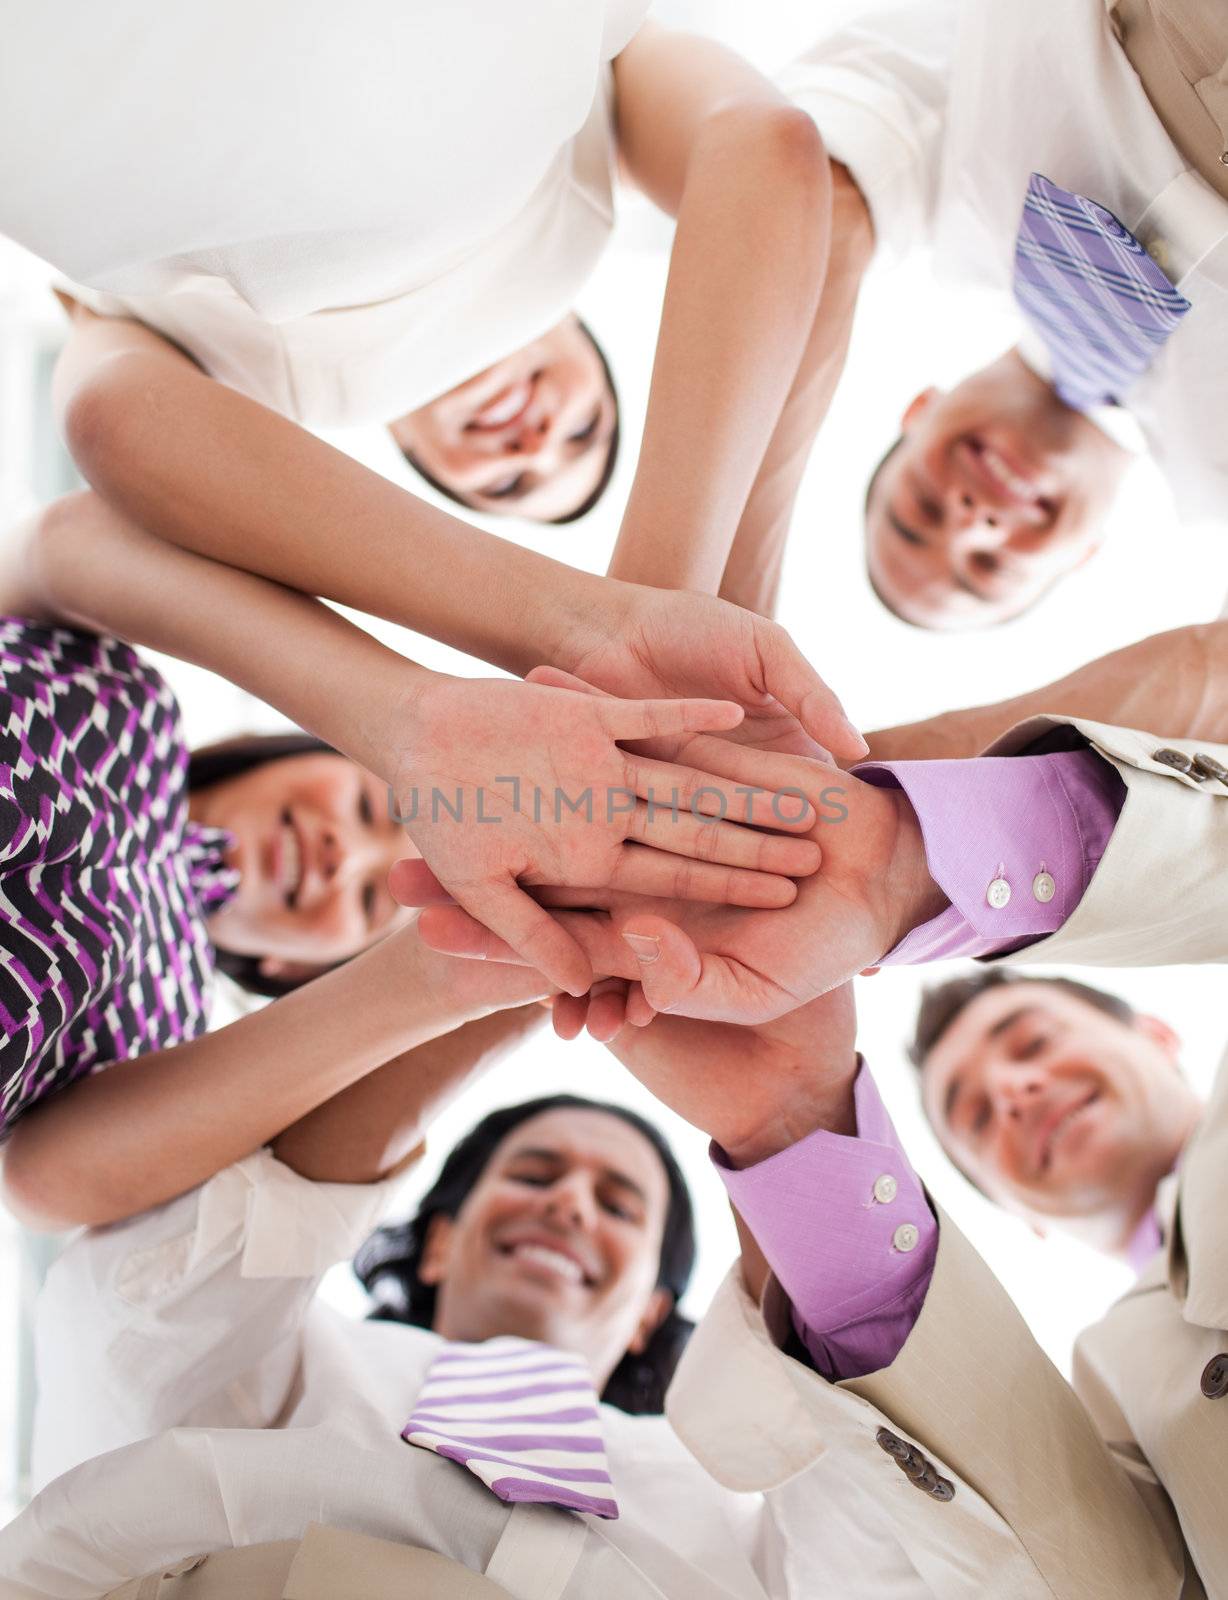 International business people holding hands together  by Wavebreakmedia